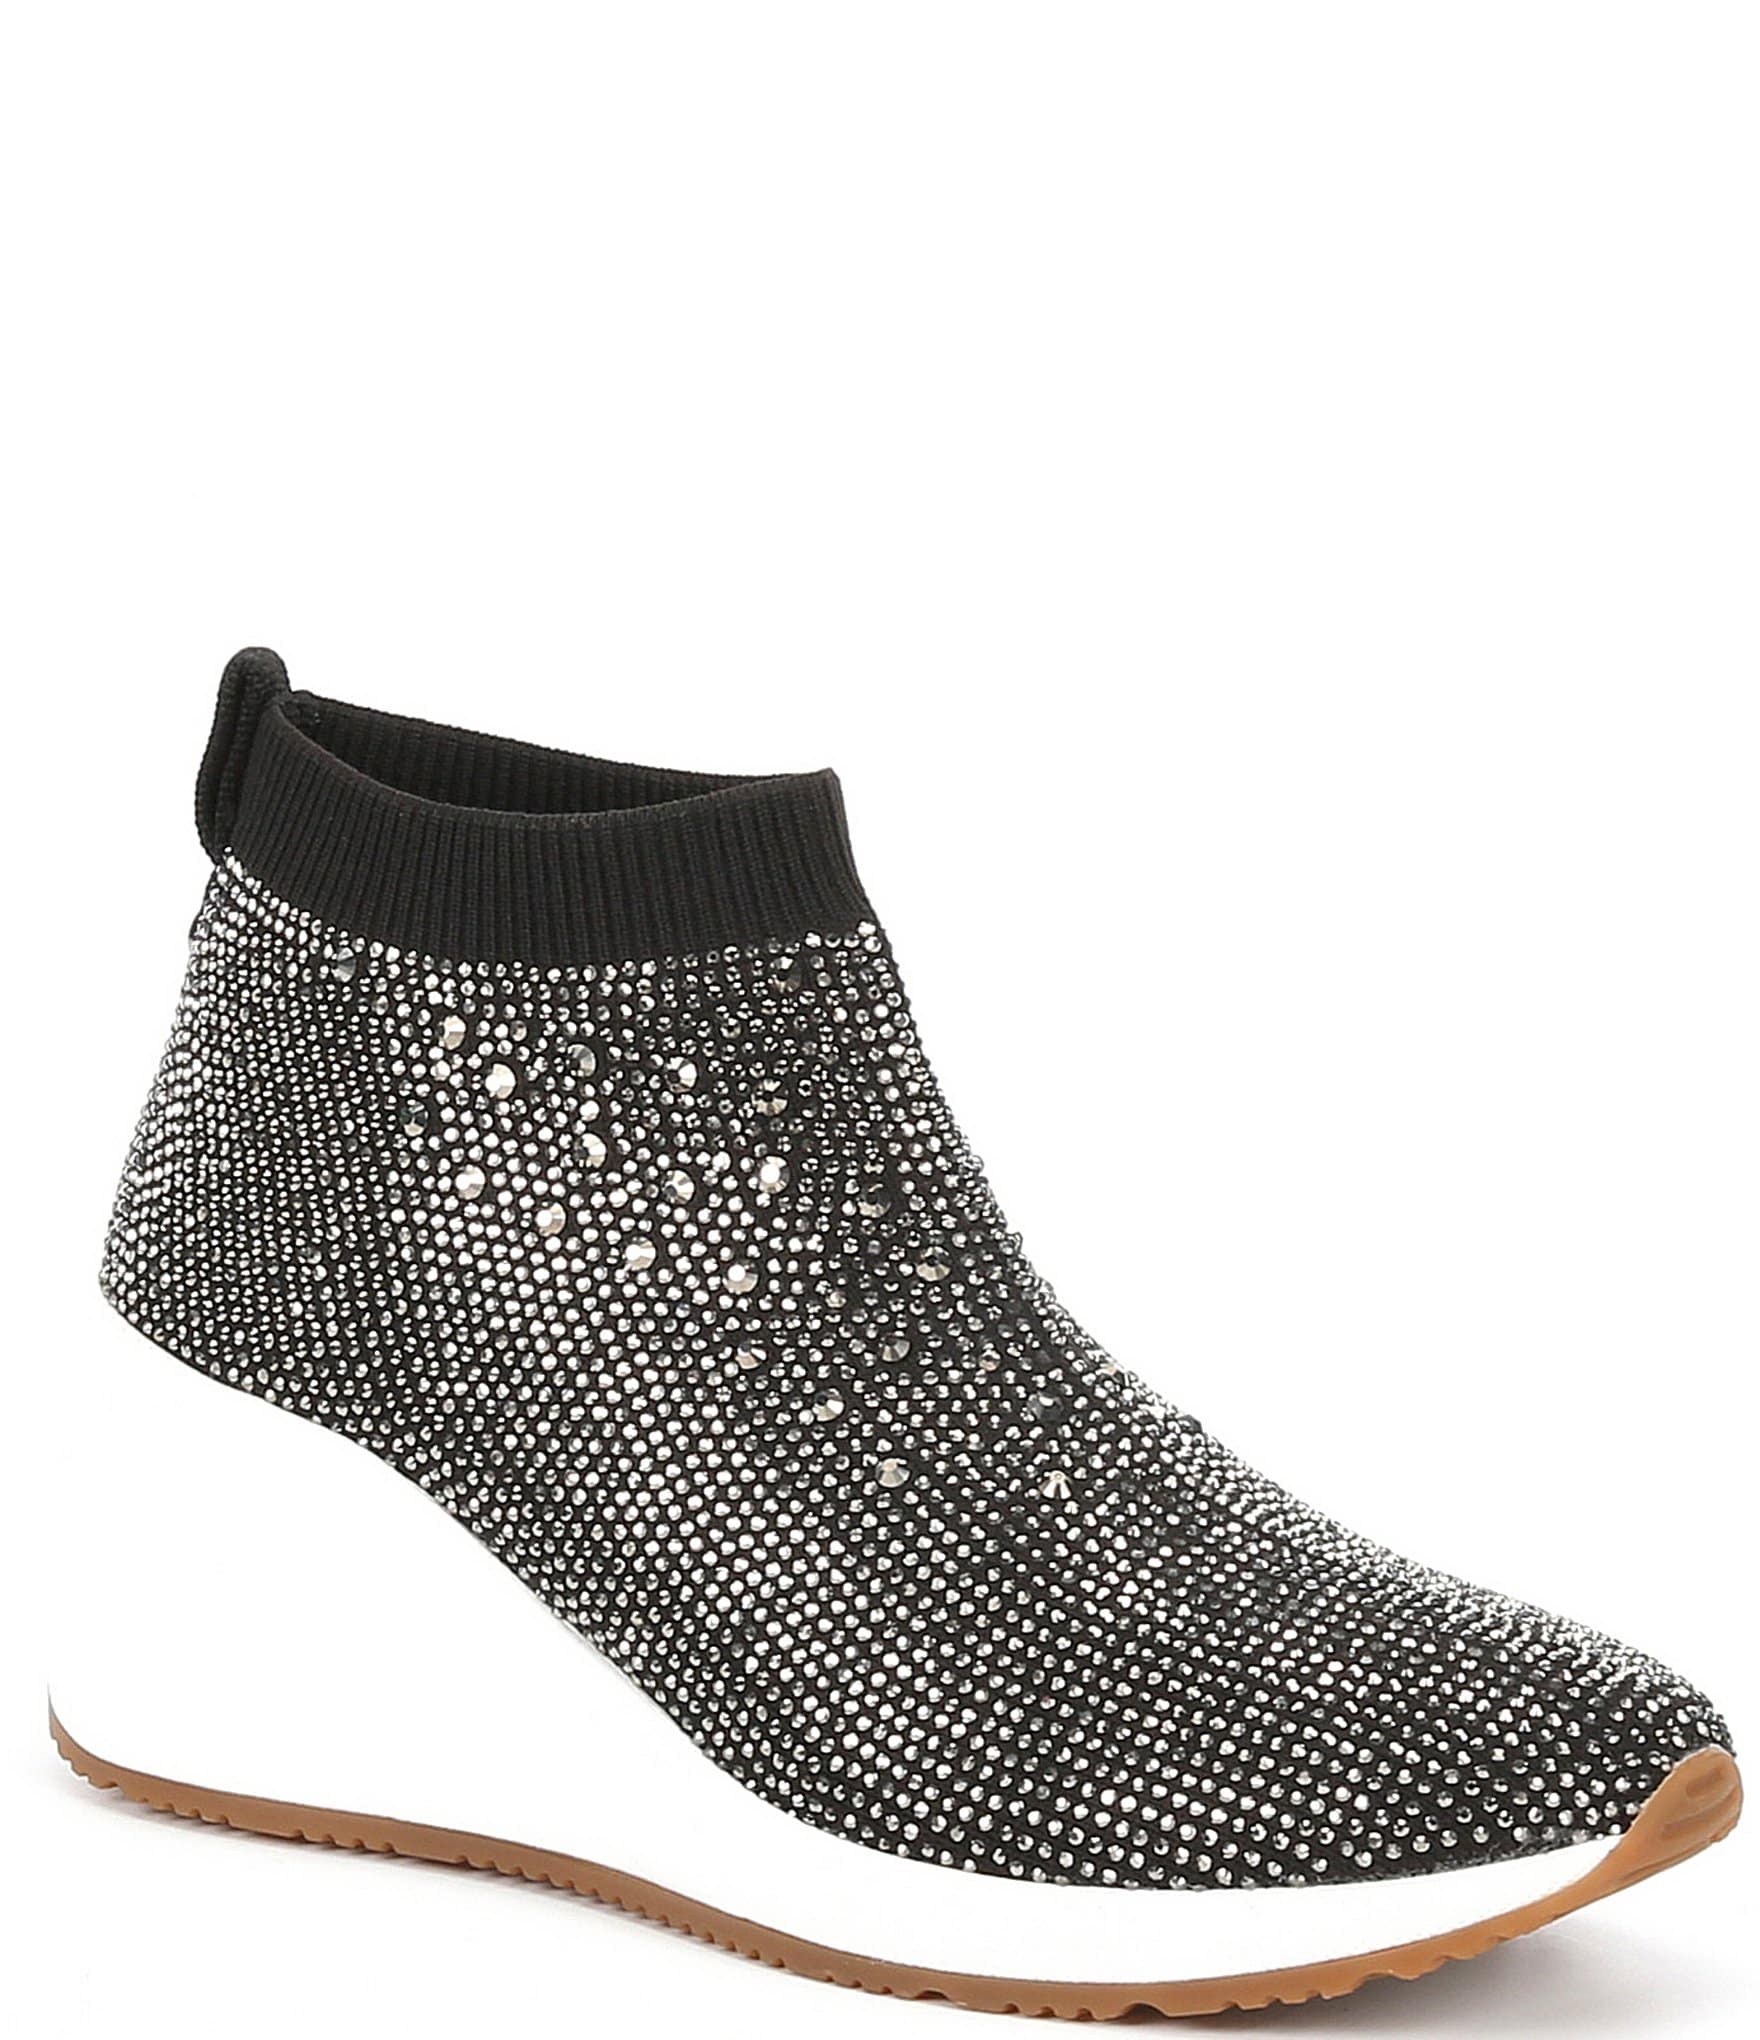 Simanlan Women's Casual Platform Rhinestones Glitter Slip on Sneakers Flat Walking Shoes, Size: 11, Black